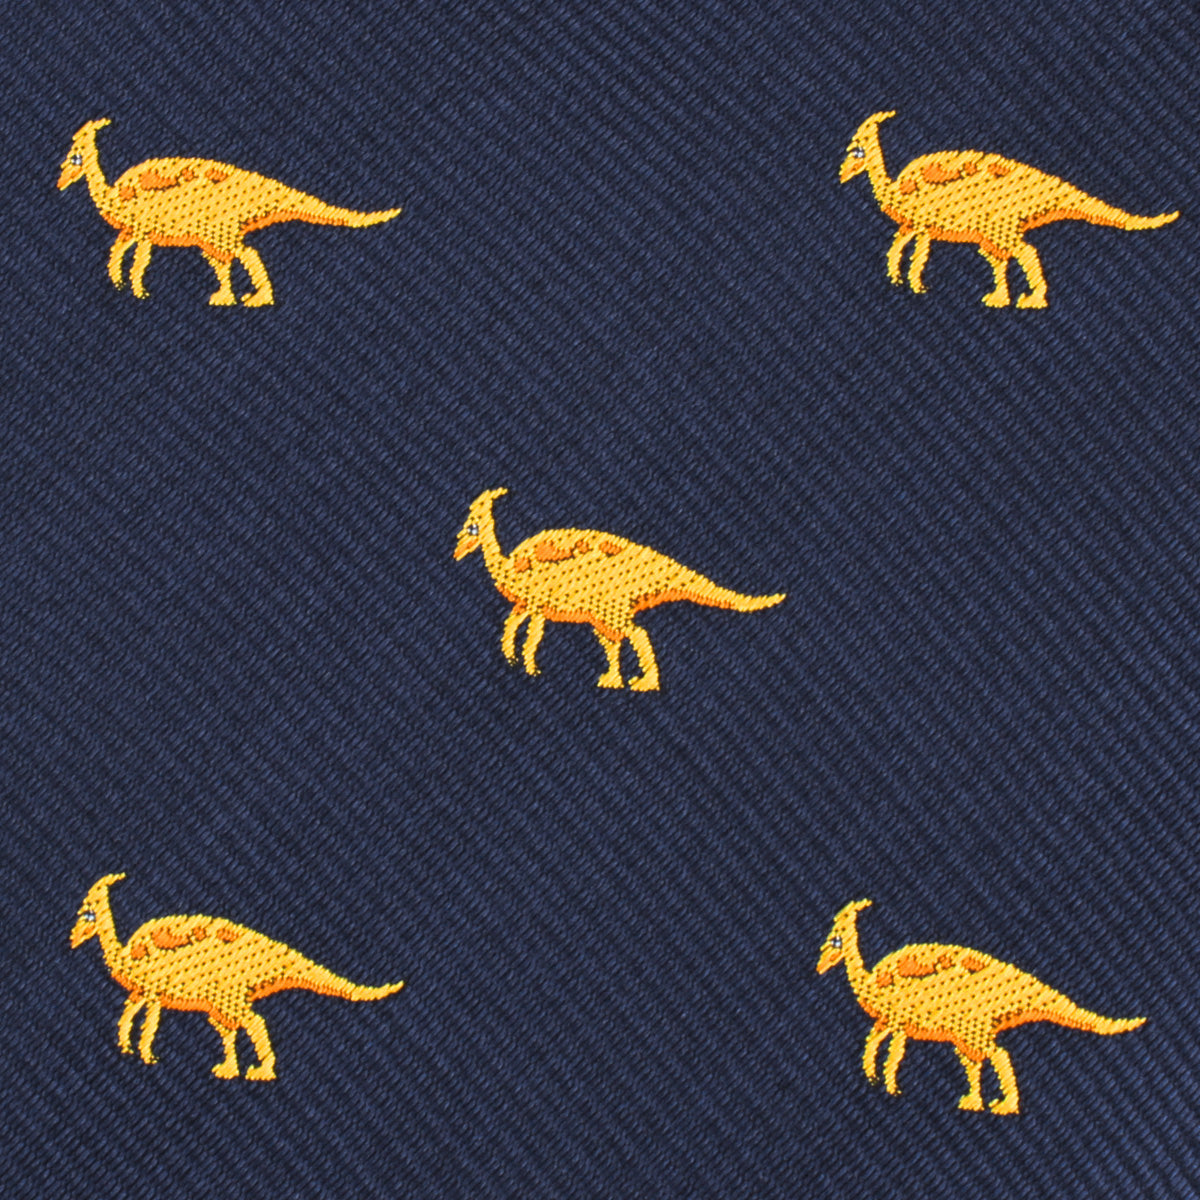 Parasaurolophus Dinosaurs Pocket Square Fabric